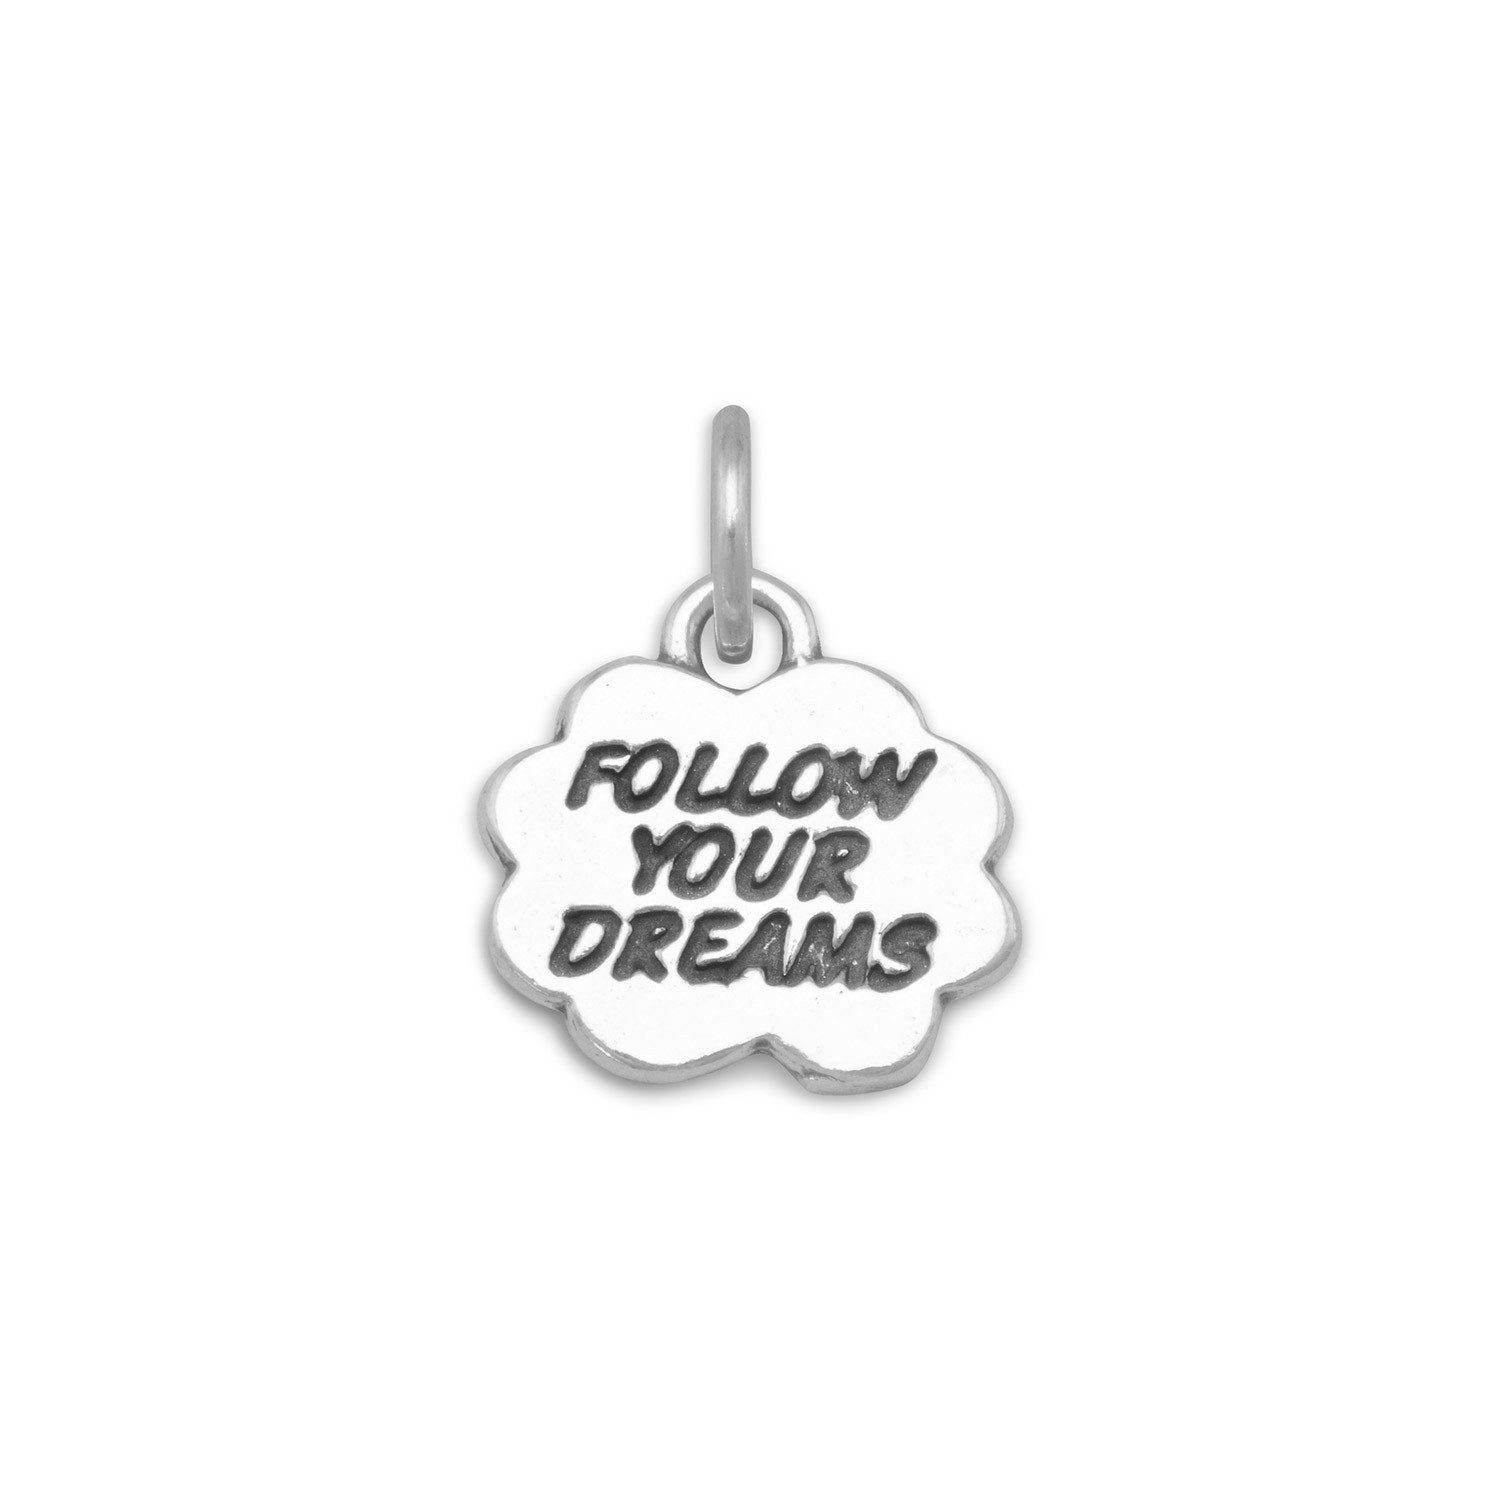 Follow Your Dreams Charm - Joyeria Lady